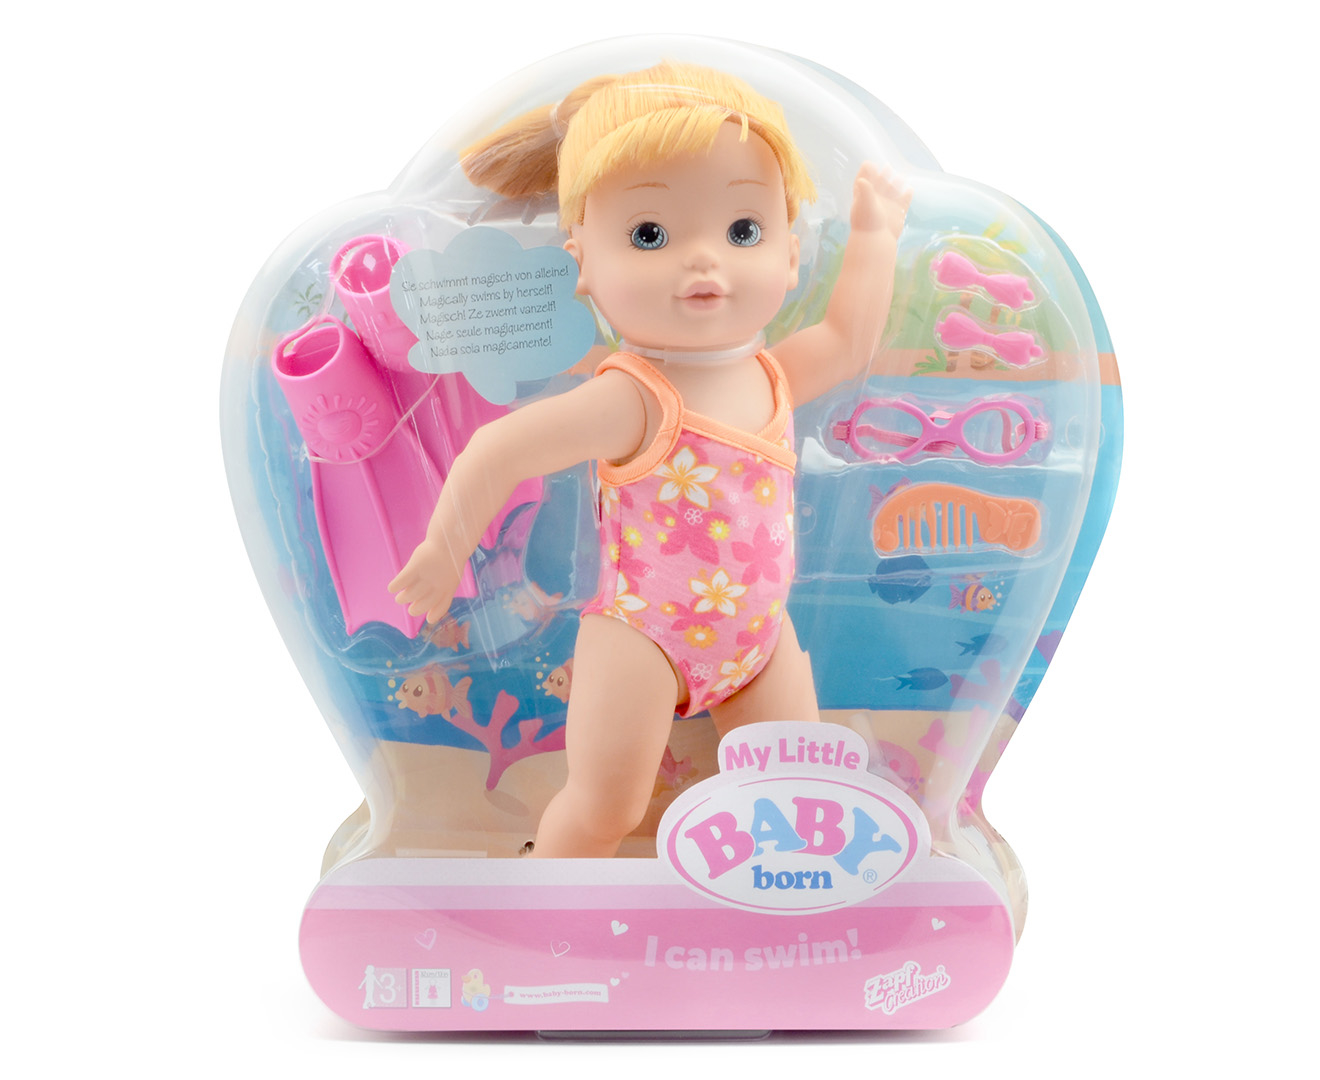 baby born swimming doll